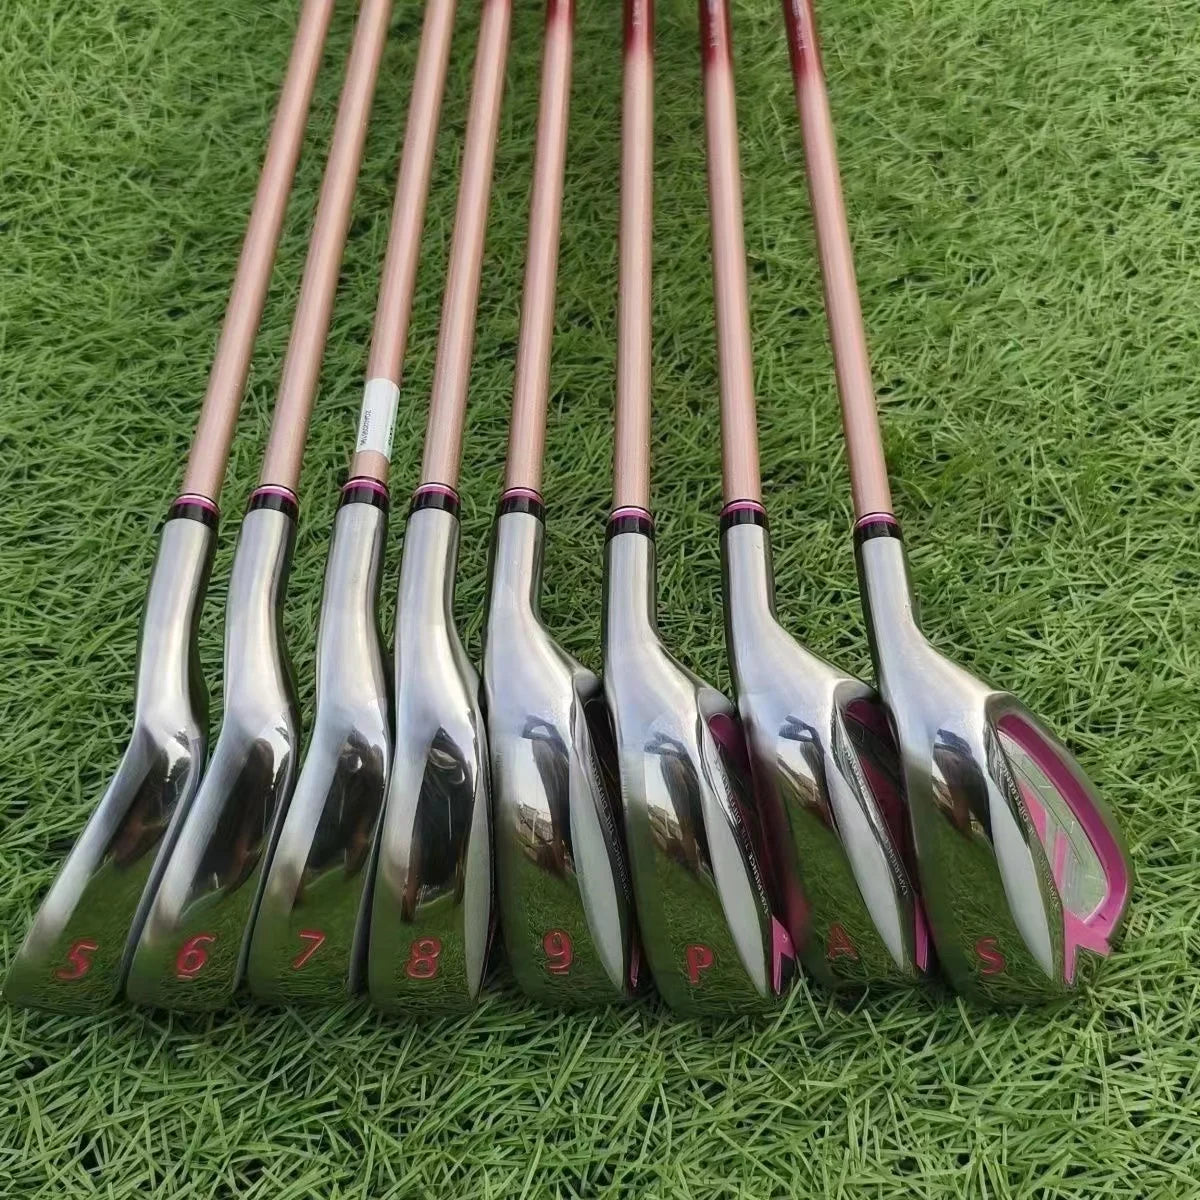 Ladies Long Distance Golf Iron Set with Graphite Shaft